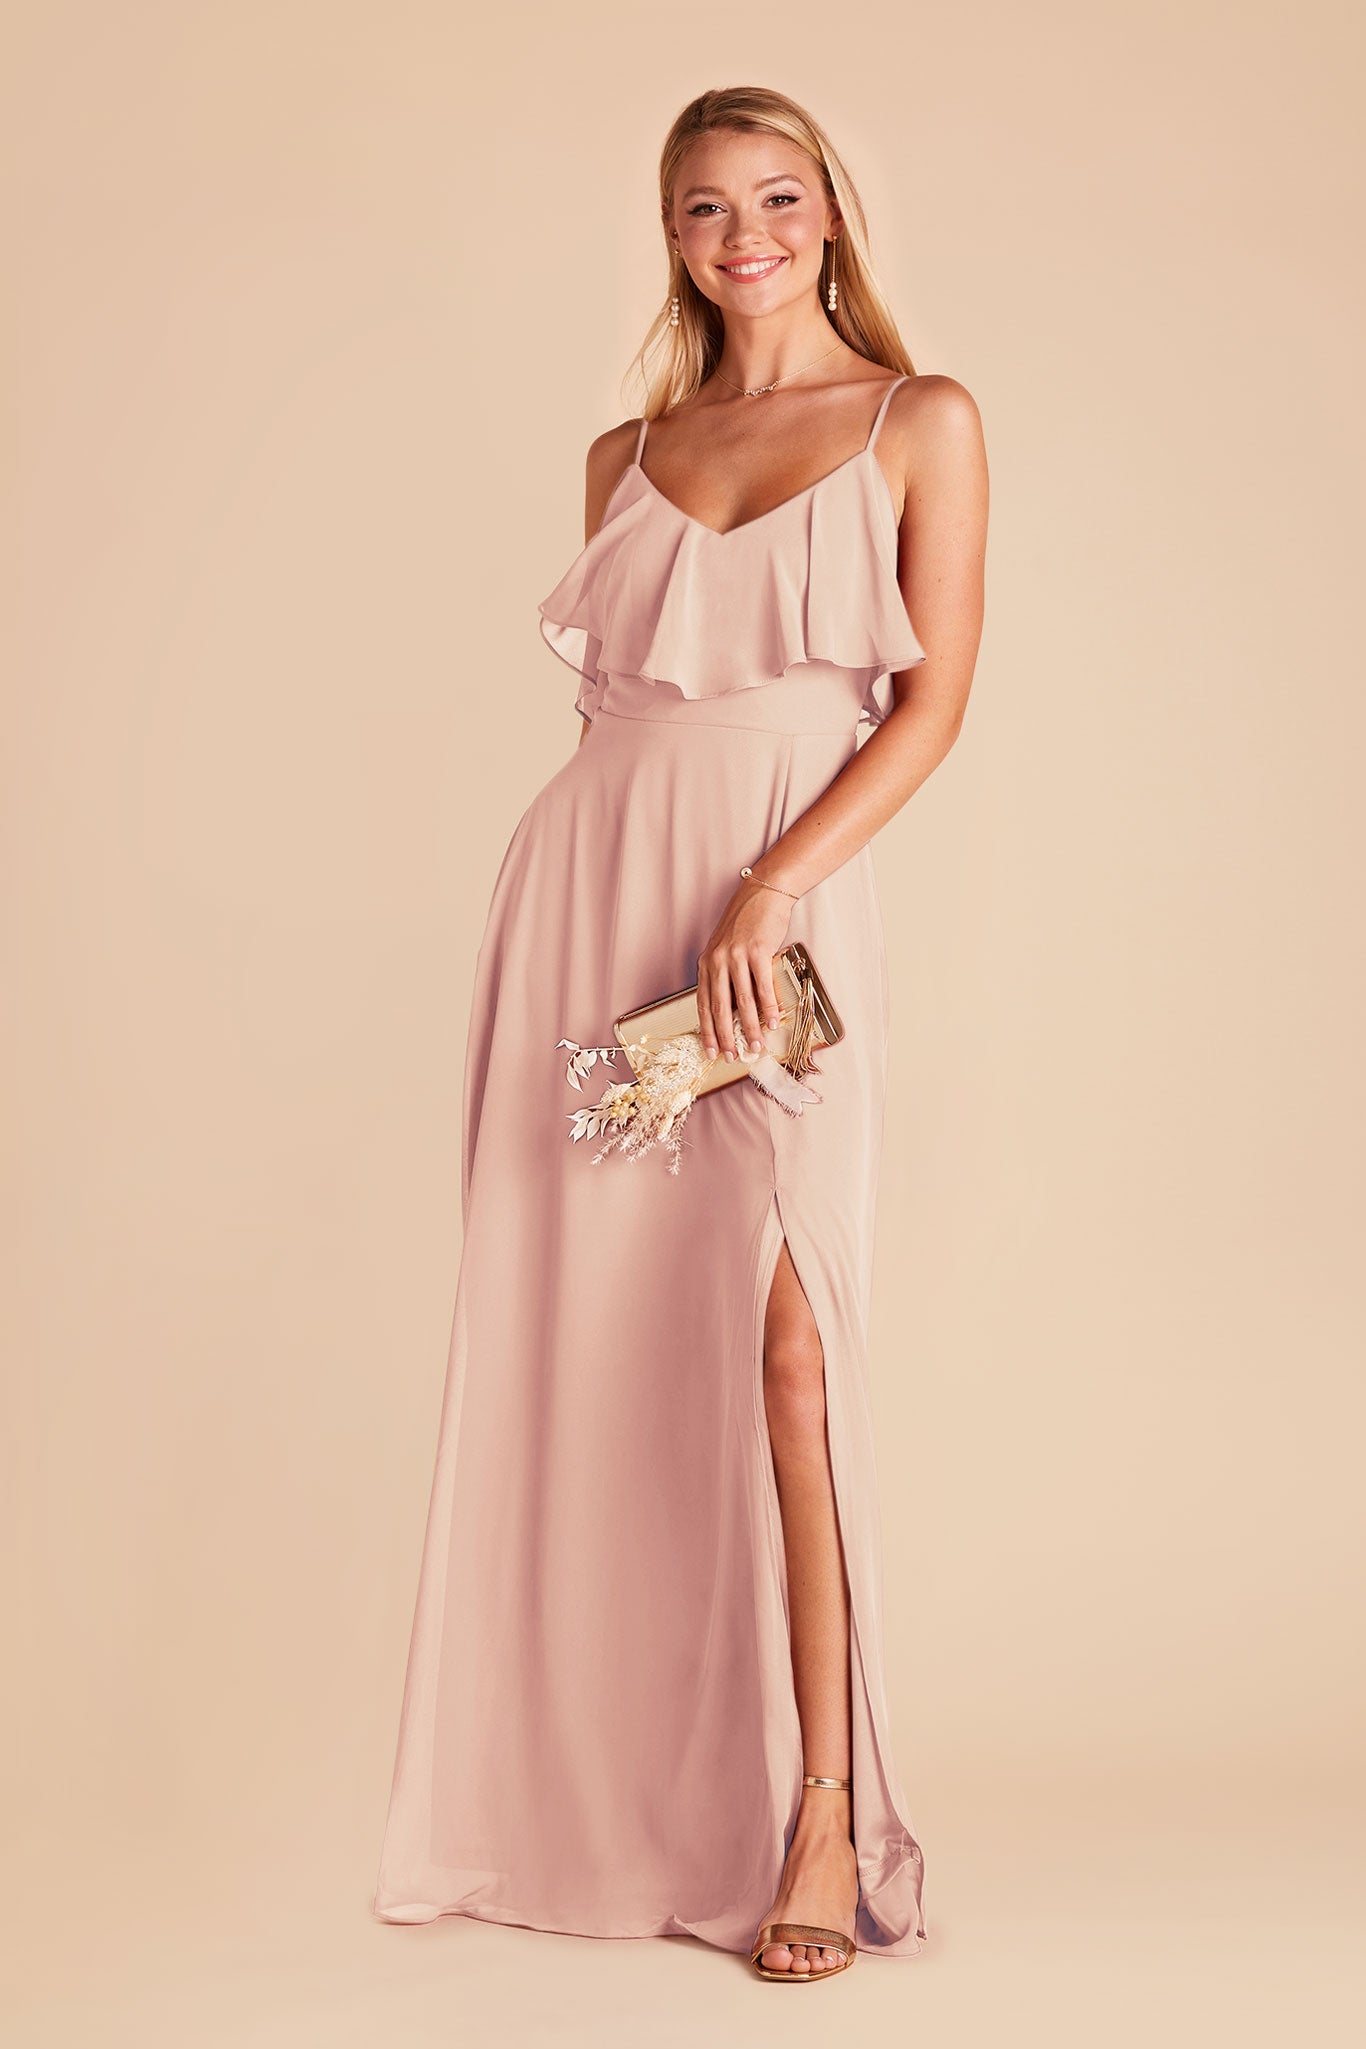 Blush Pink Jane Convertible Dress by Birdy Grey